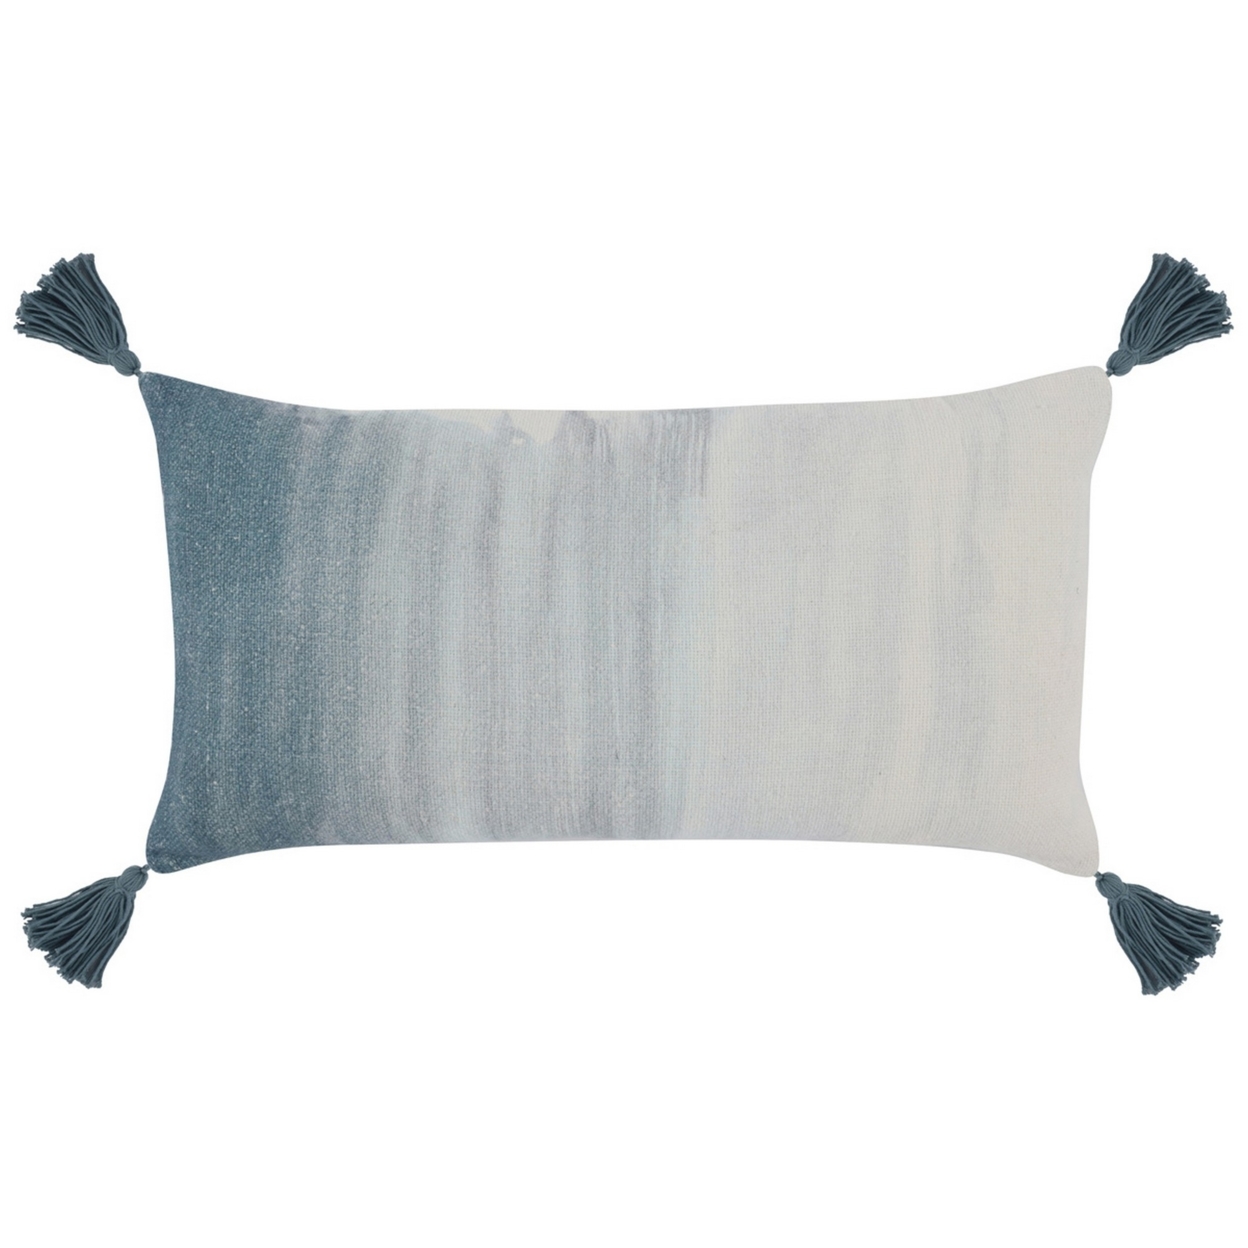 14 X 26 Lumbar Accent Throw Pillow, Fringe Tassels, Watercolor Blue, Ivory, Saltoro Sherpi